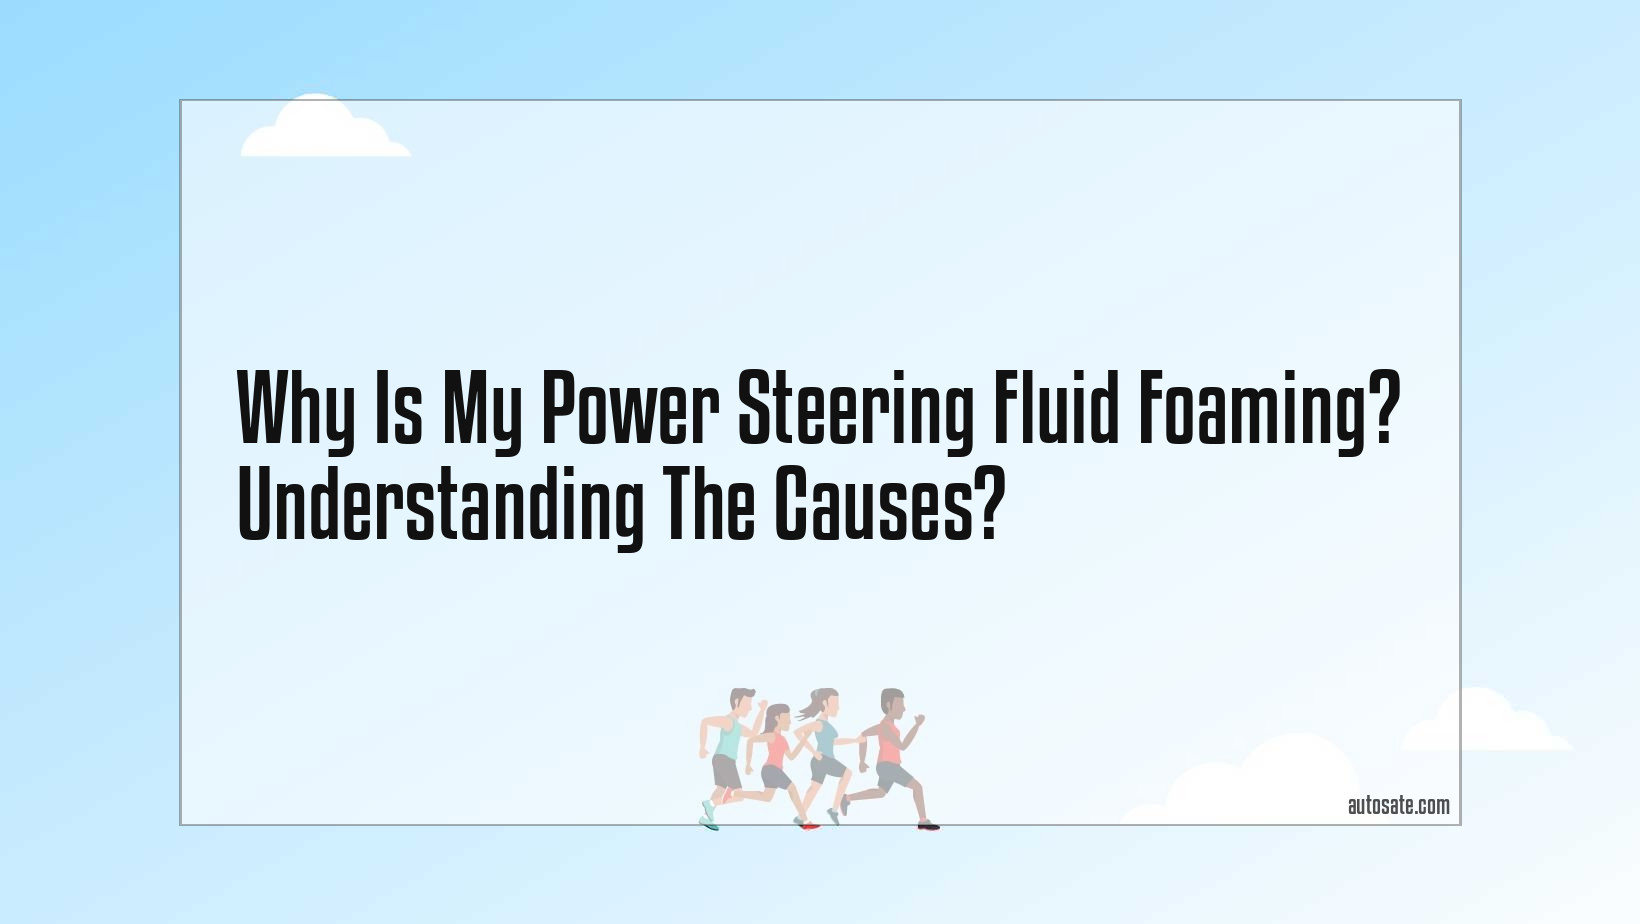 Why Is My Power Steering Fluid Foaming? Understanding The Causes